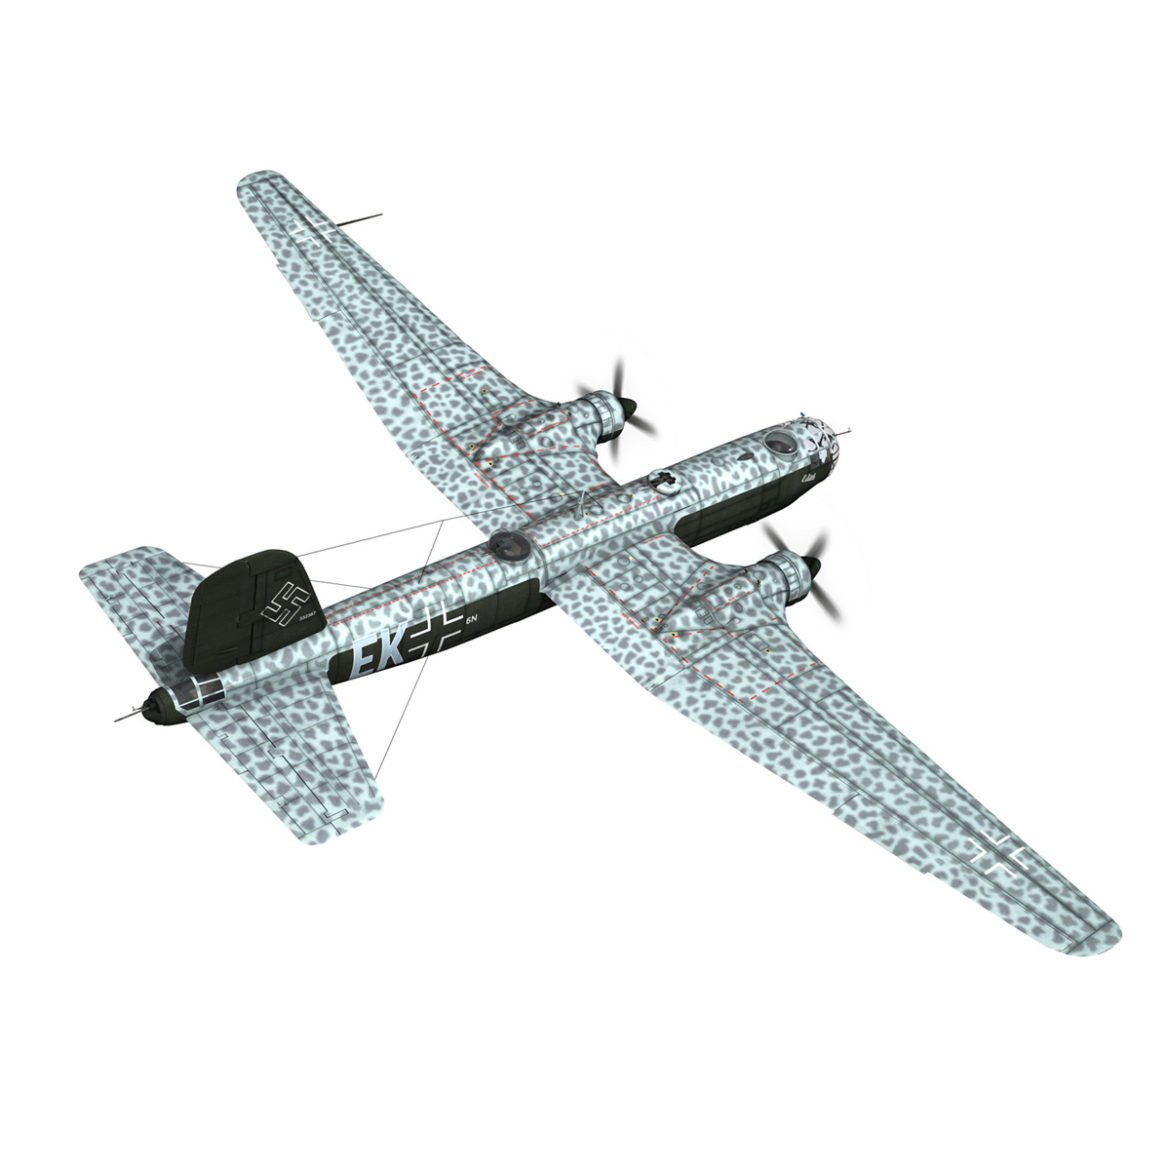 heinkel he-177 – greif – 6nek 3d model 3ds c4d fbx lwo lw lws obj 303977